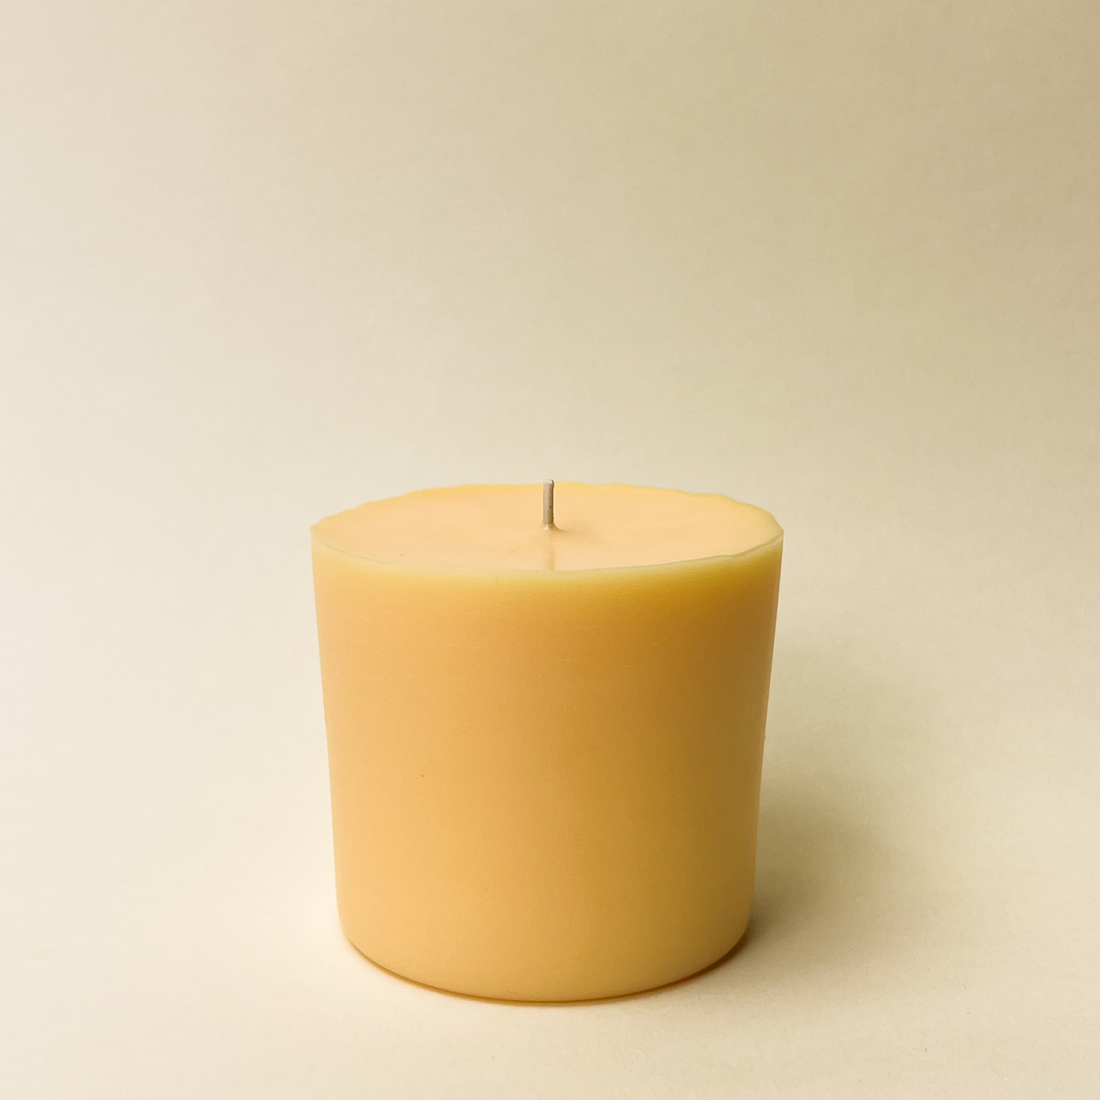 Yuno's "Citrus Peel" candle refill